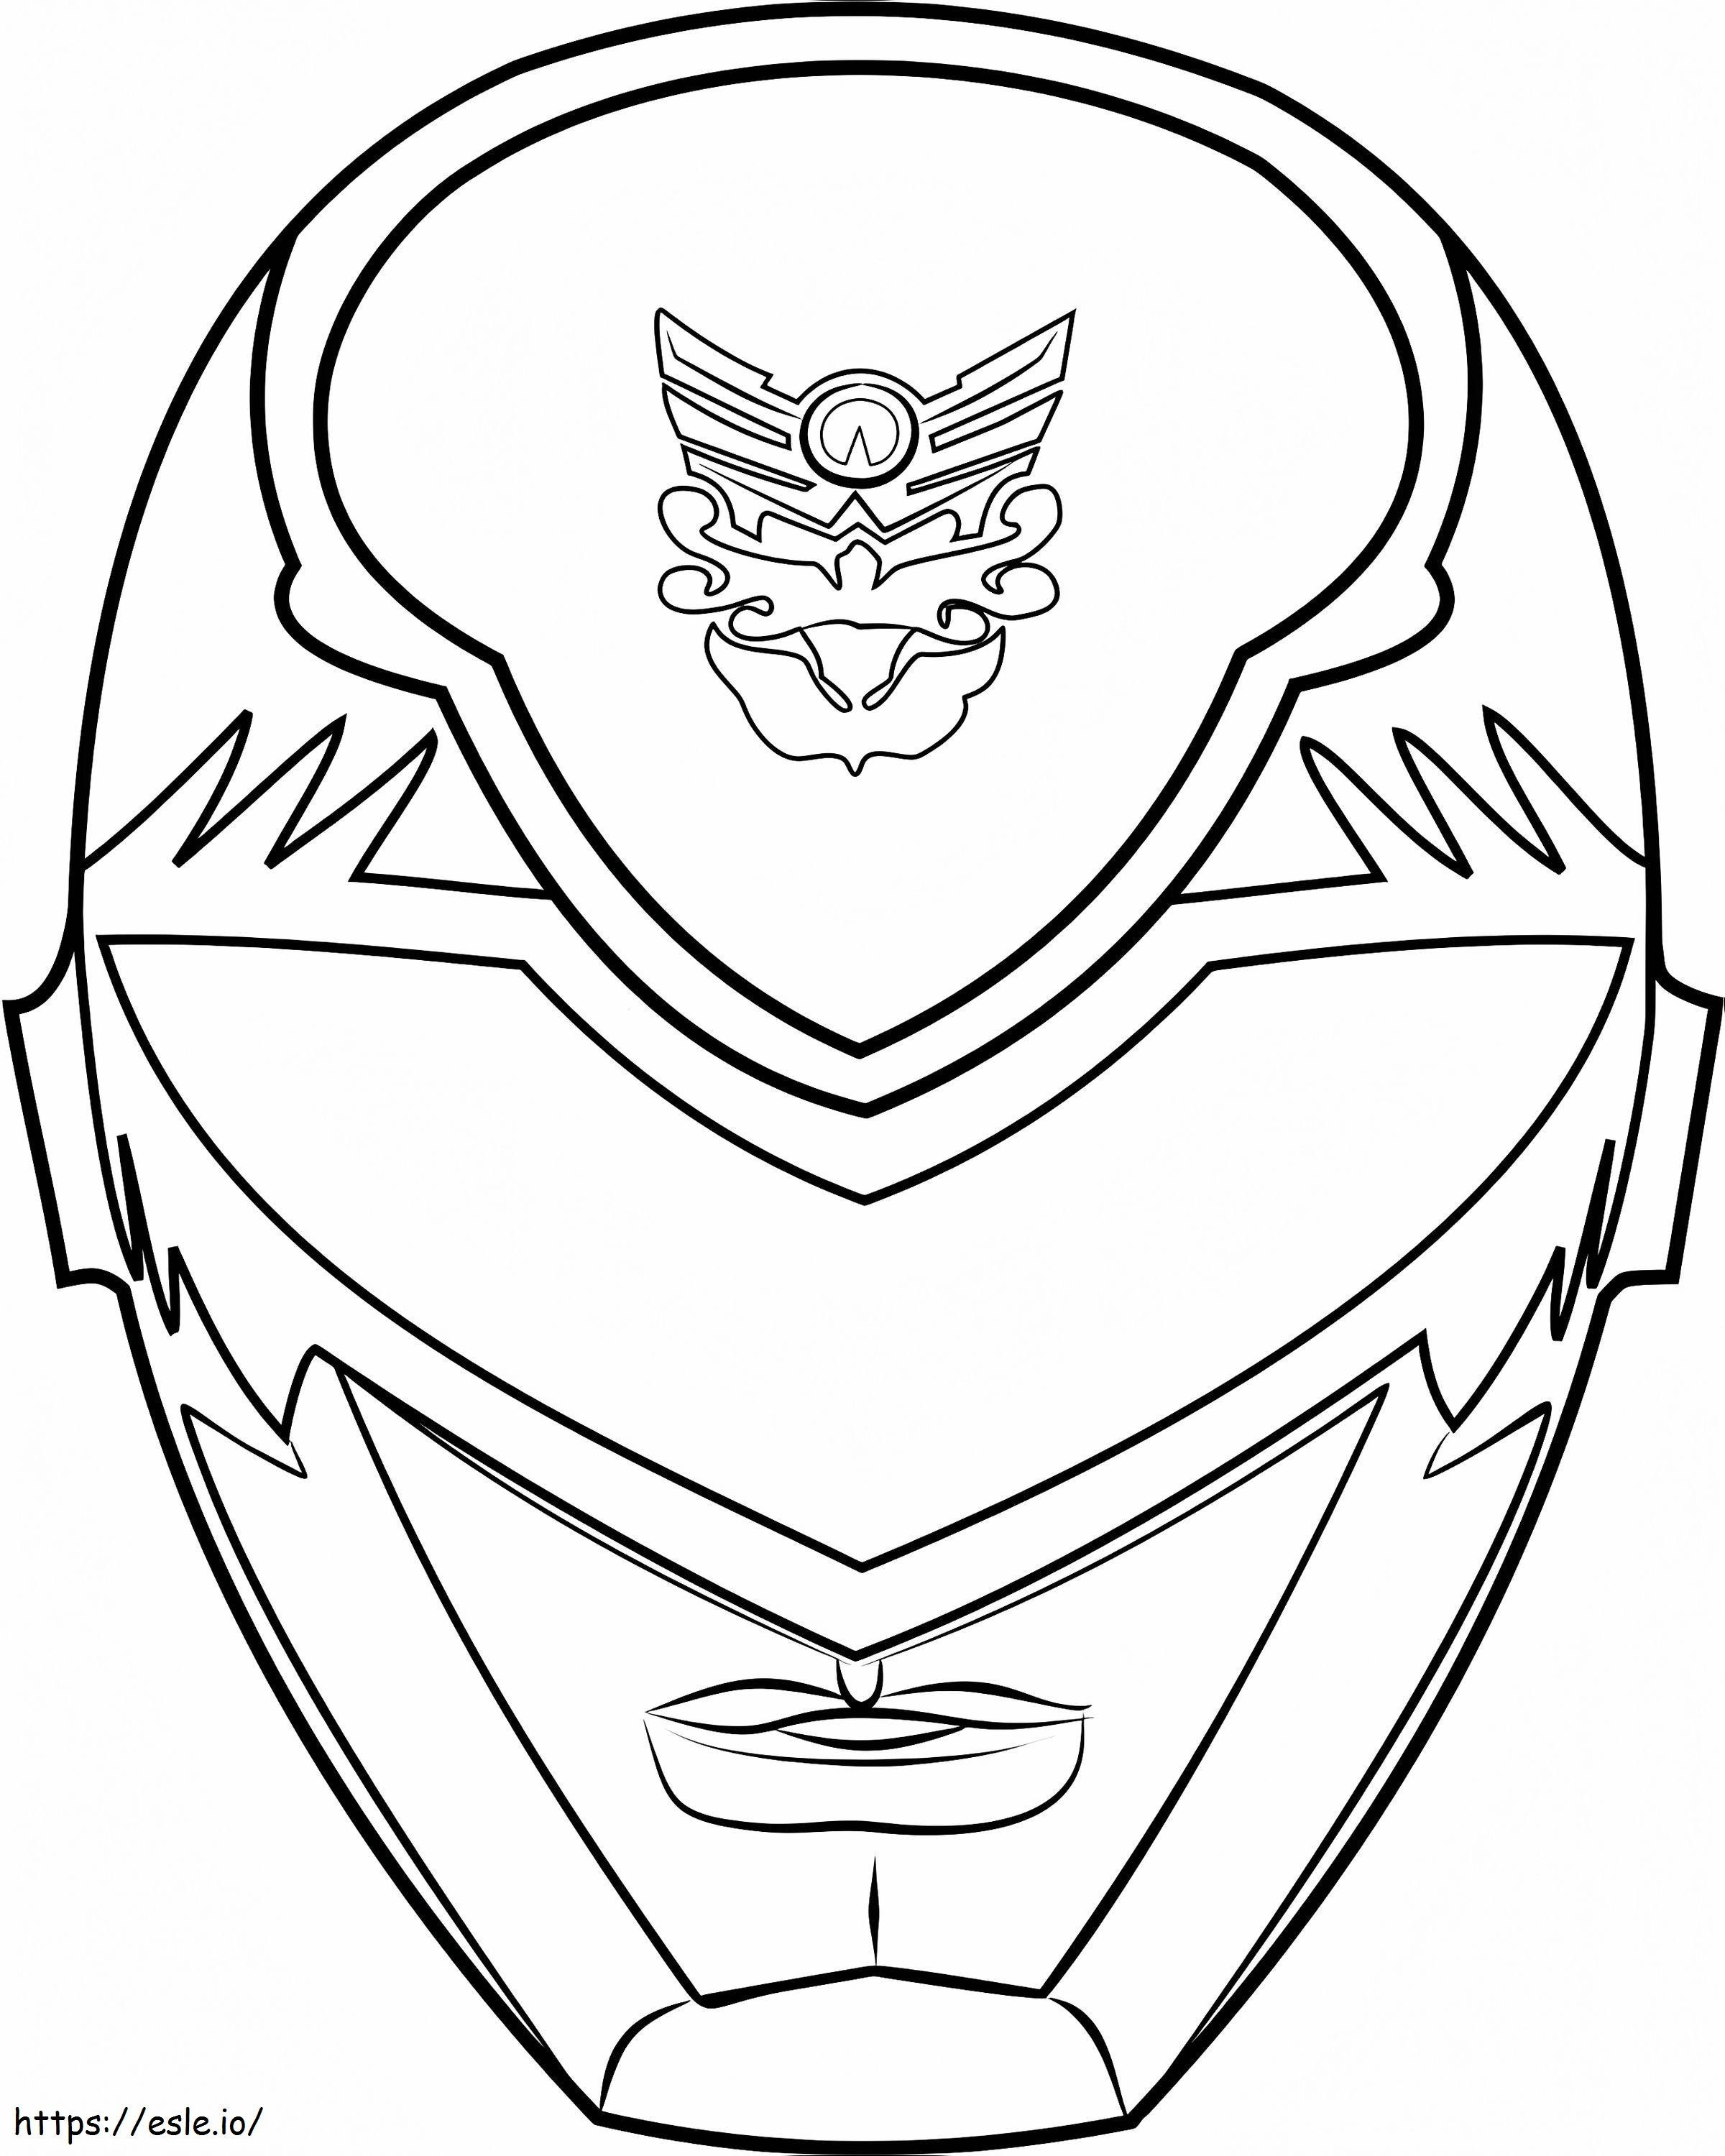 1530501643Power Ranger-masker1 kleurplaat kleurplaat